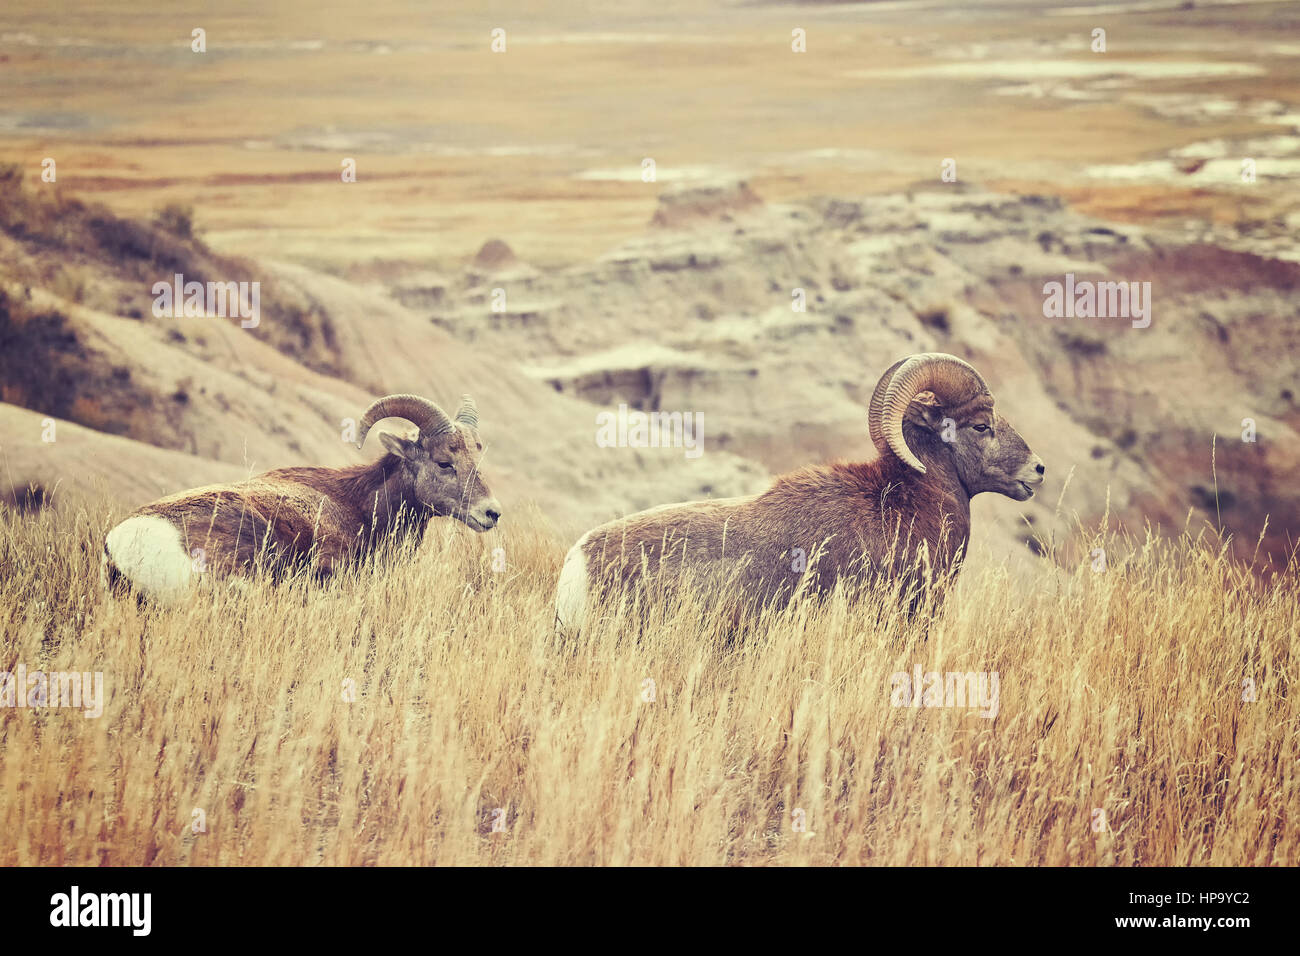 Bighorn Schafe paar Gras, getönten Farbe Bild, Badlands Nationalpark, South Dakota, USA. Stockfoto